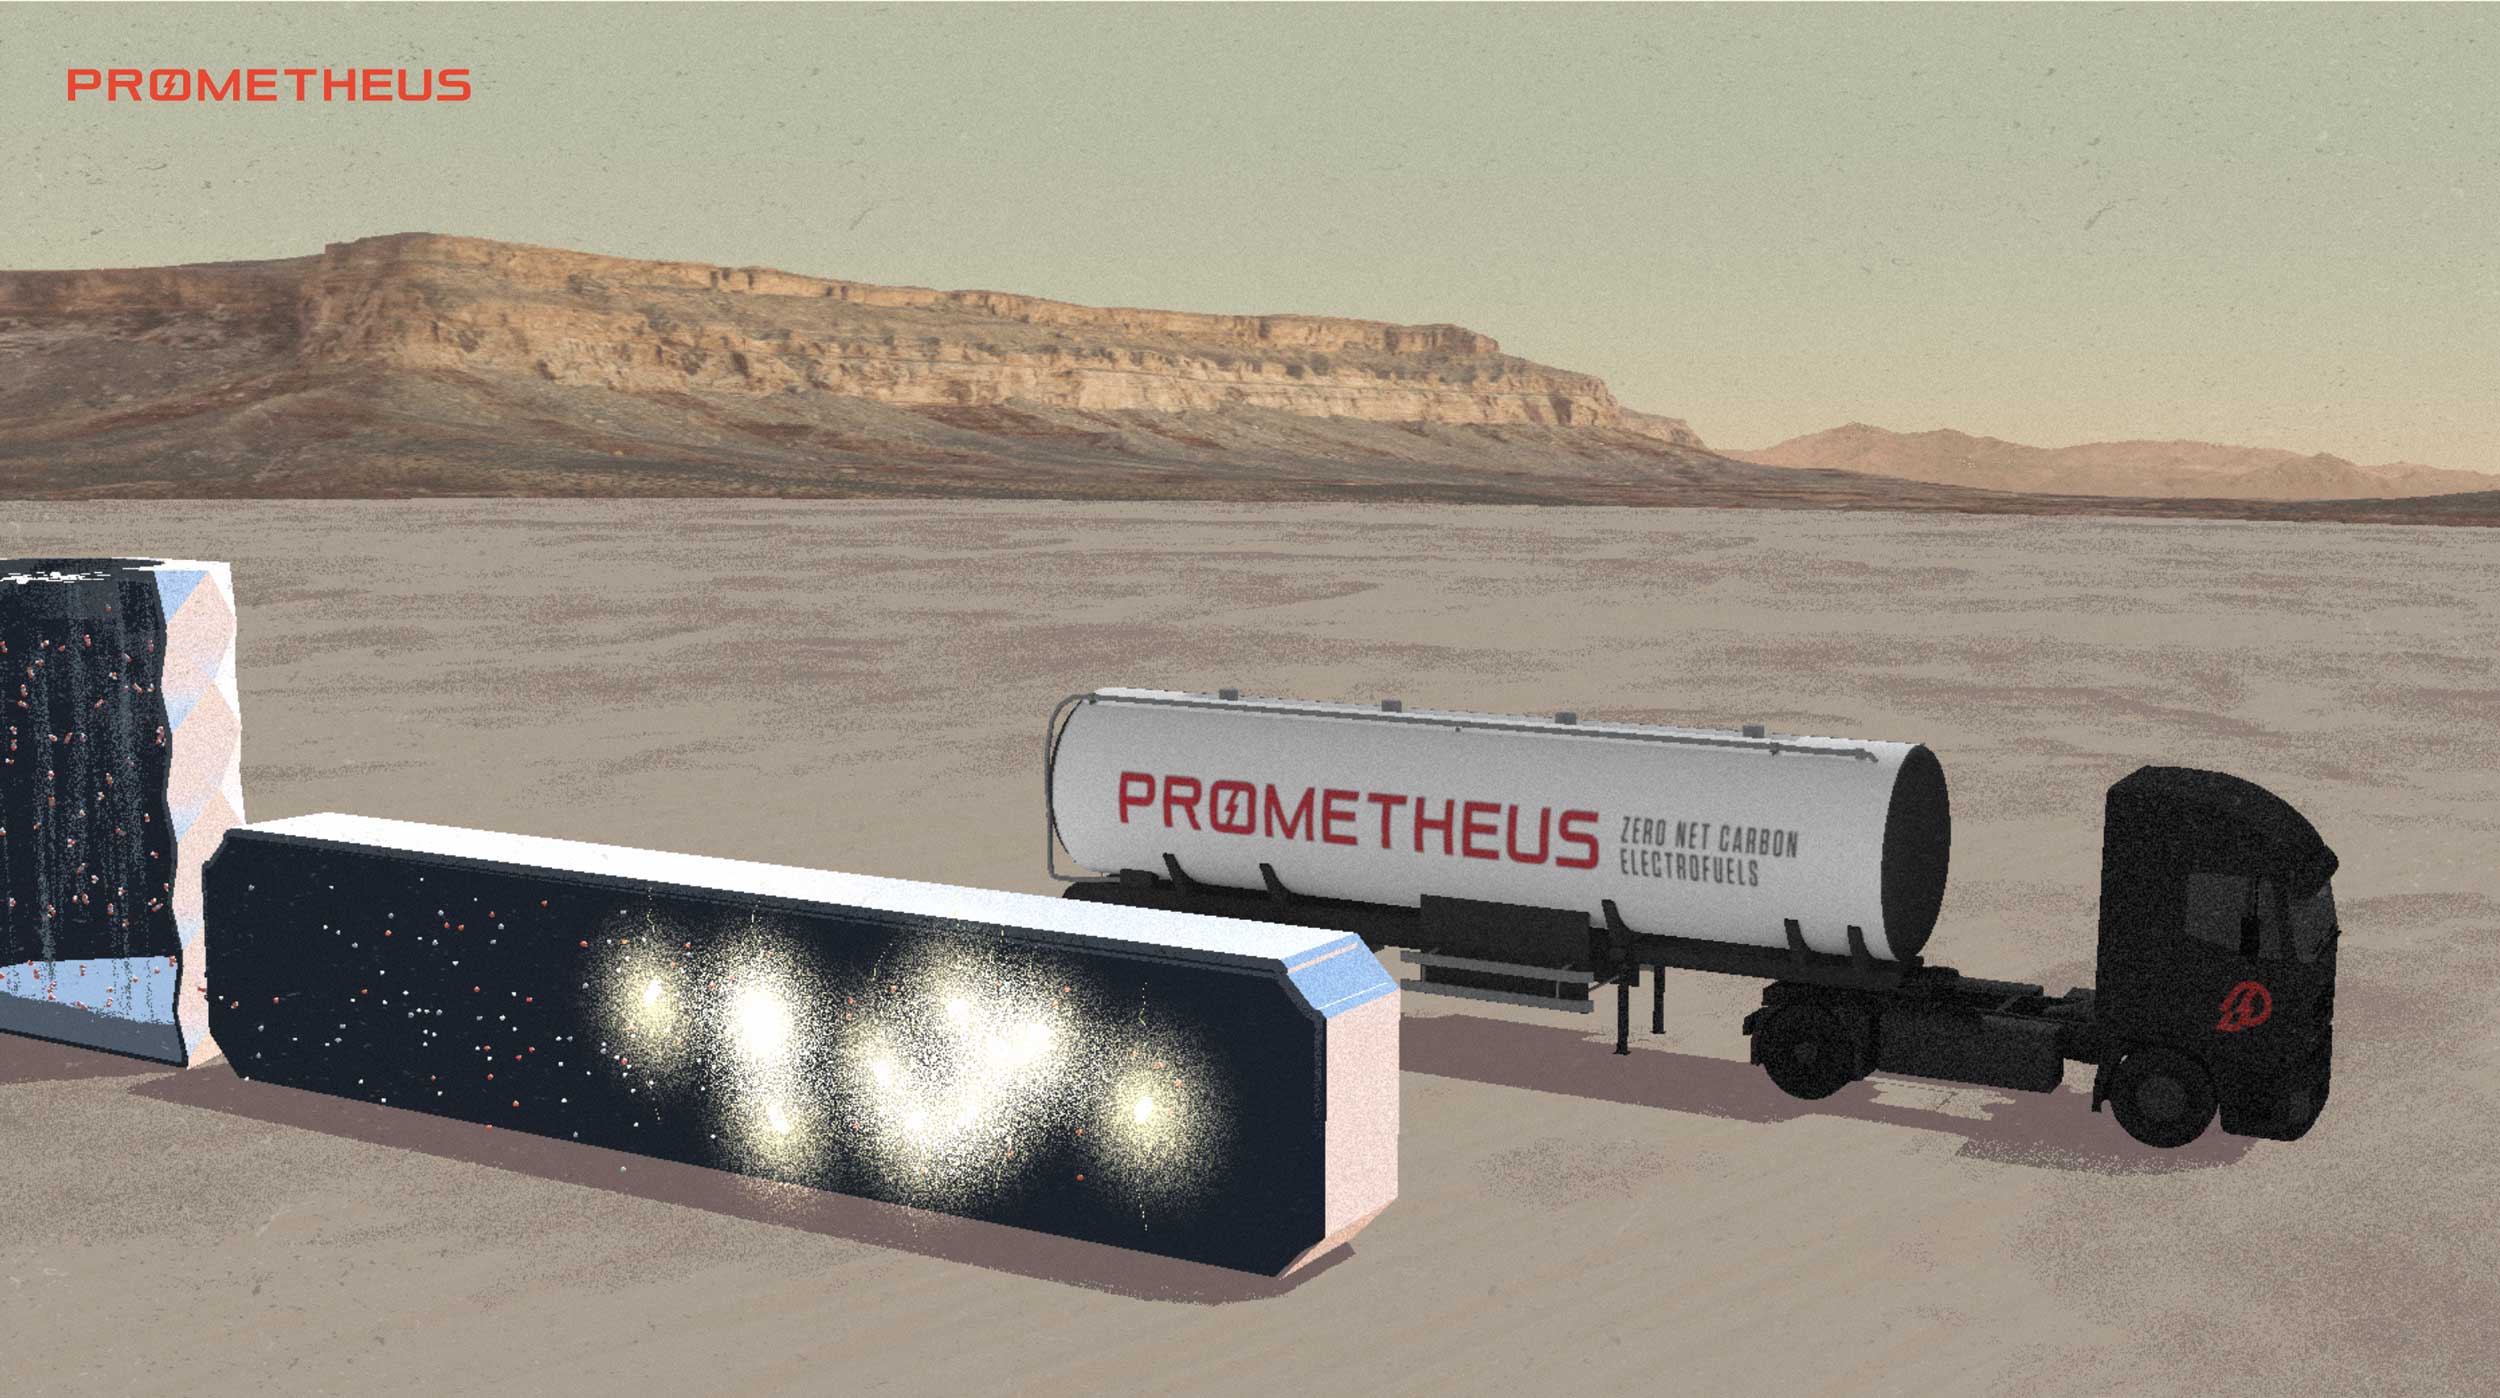 Prometheus fuel